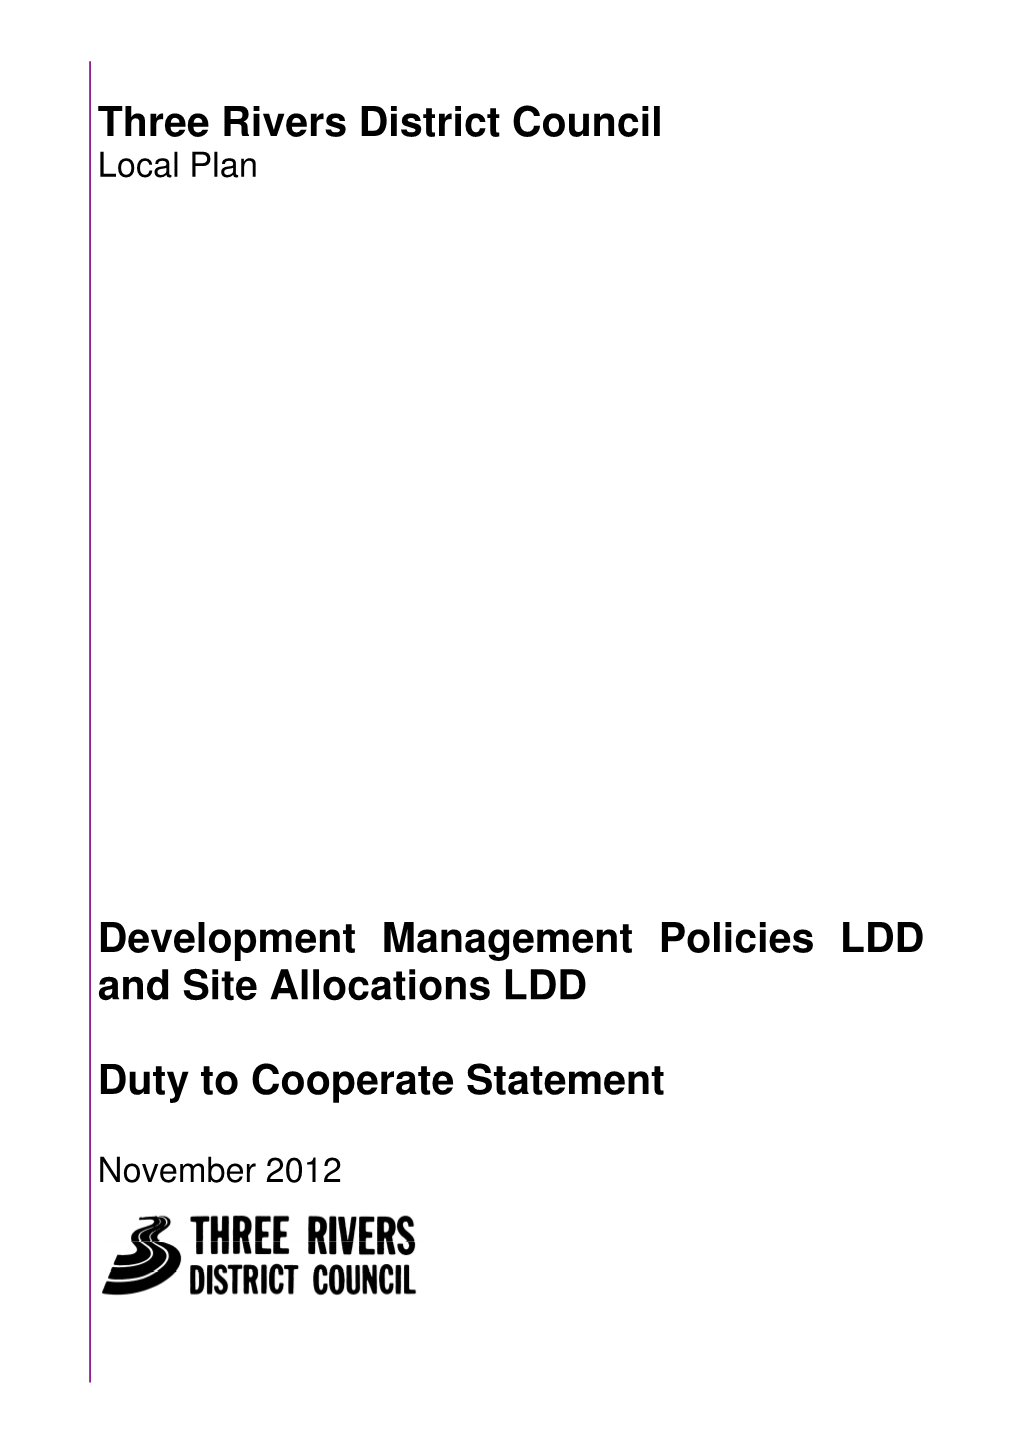 Three Rivers District Council Development Management Policies